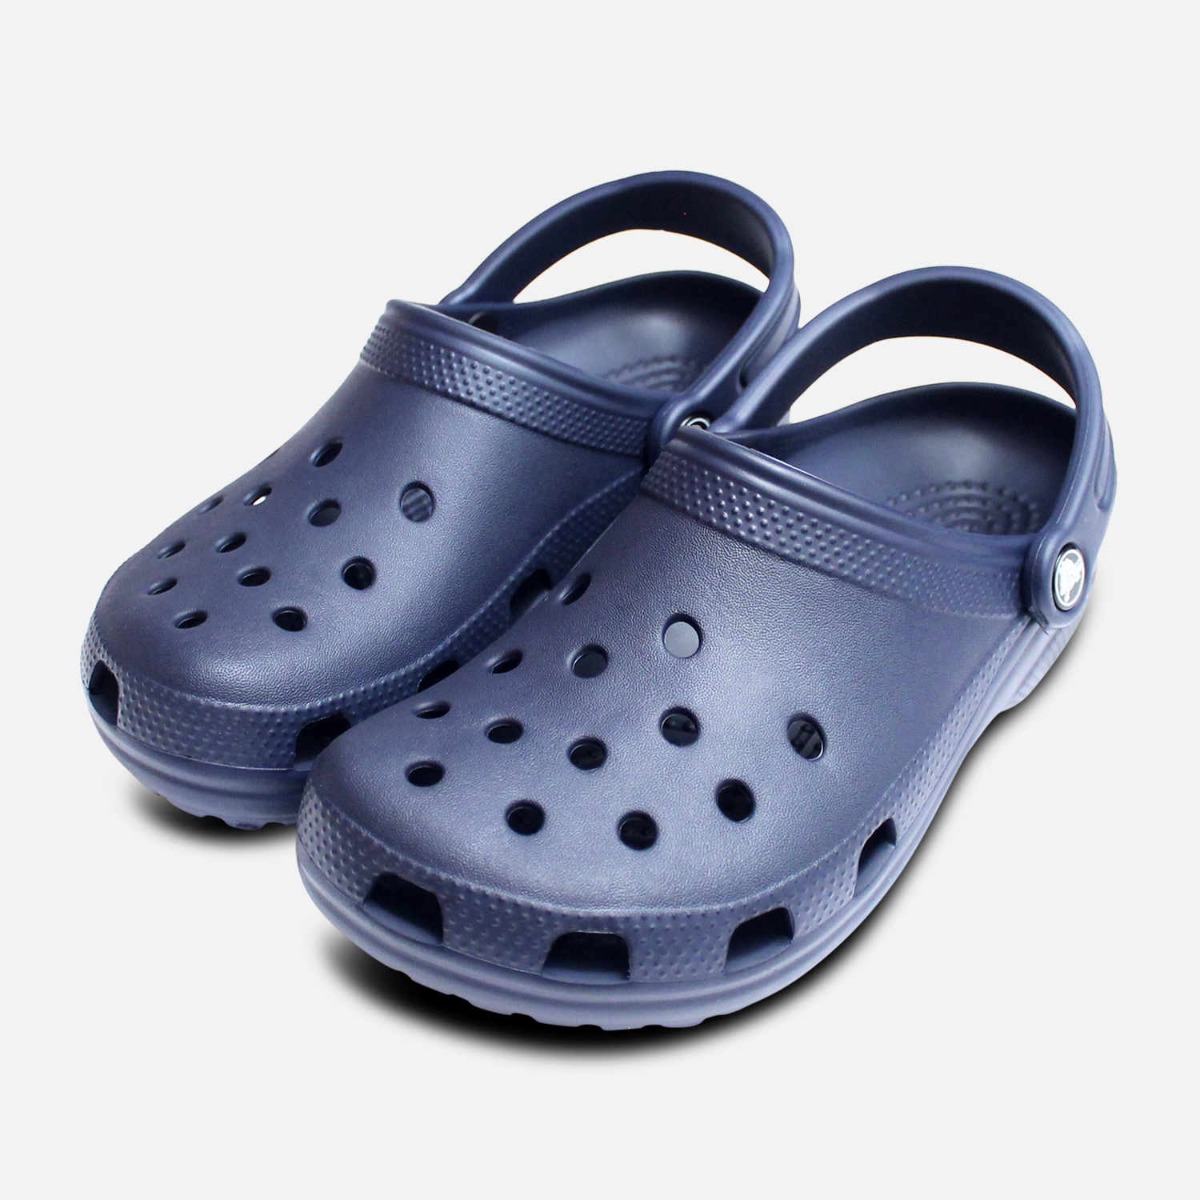 crocs navy blue shoes